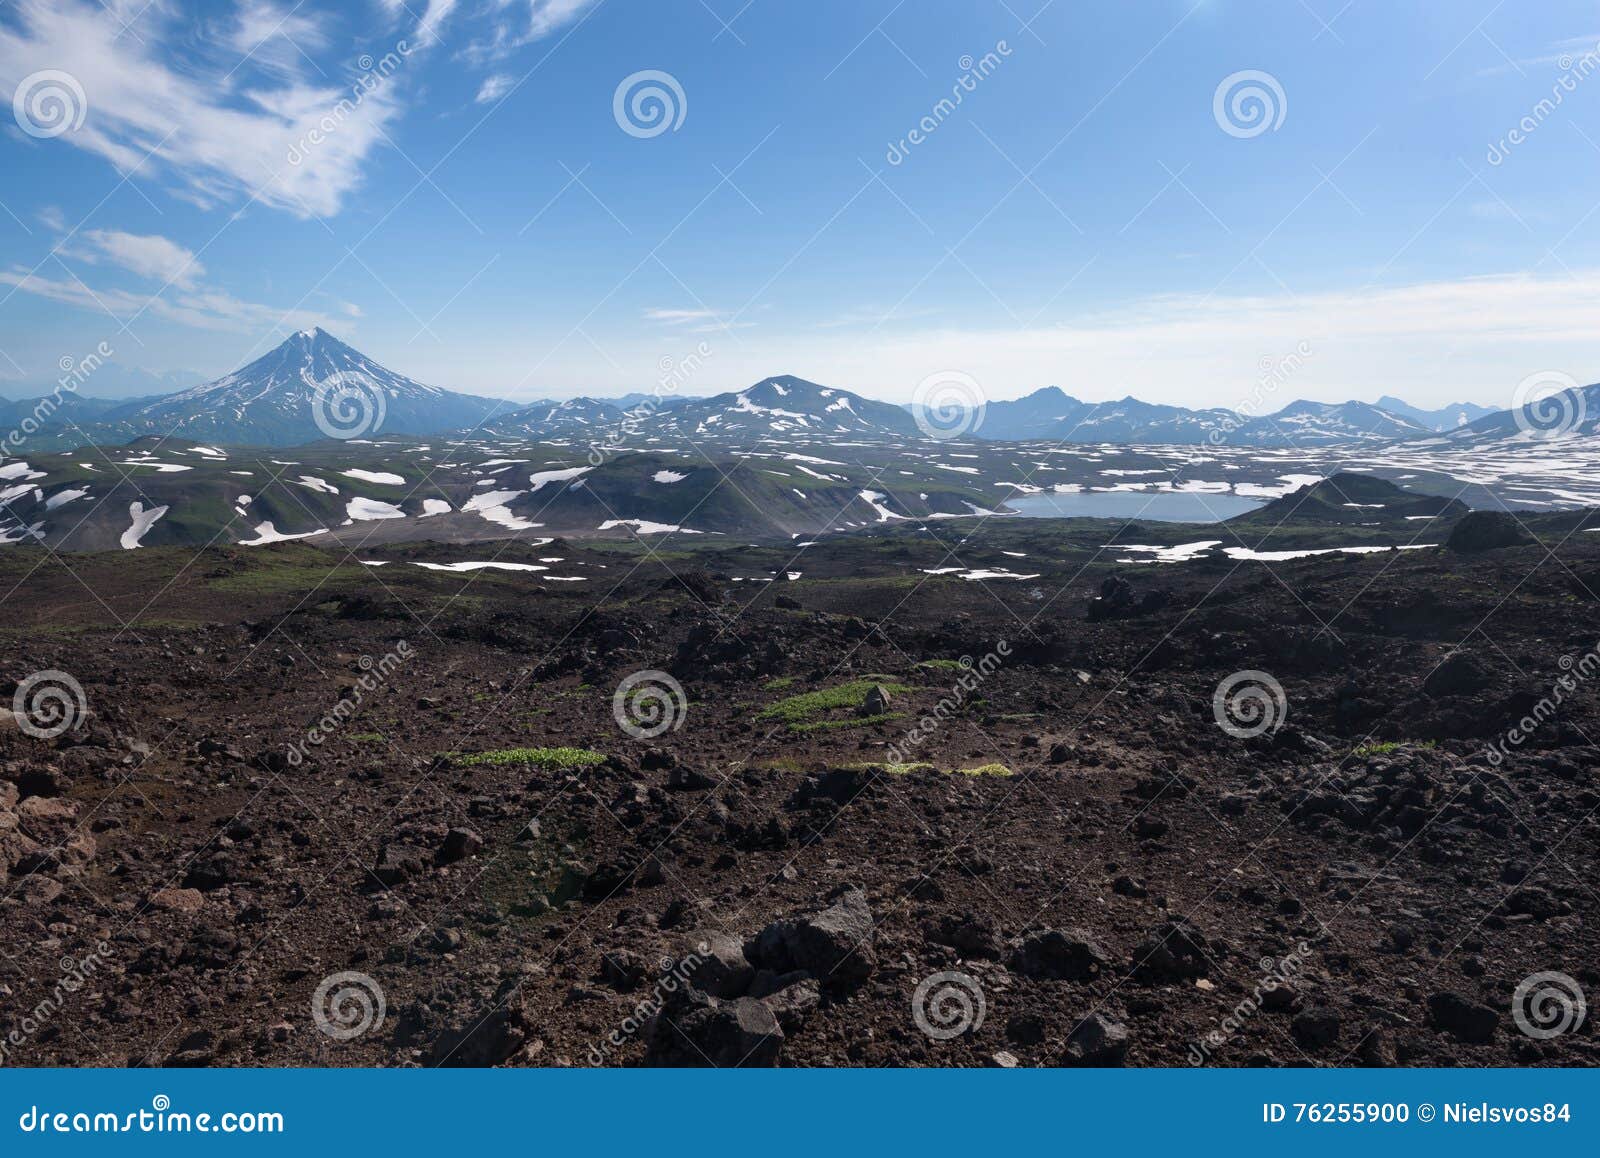 top of vilyuchinskaya volcano and mountain lake from gorely volcano